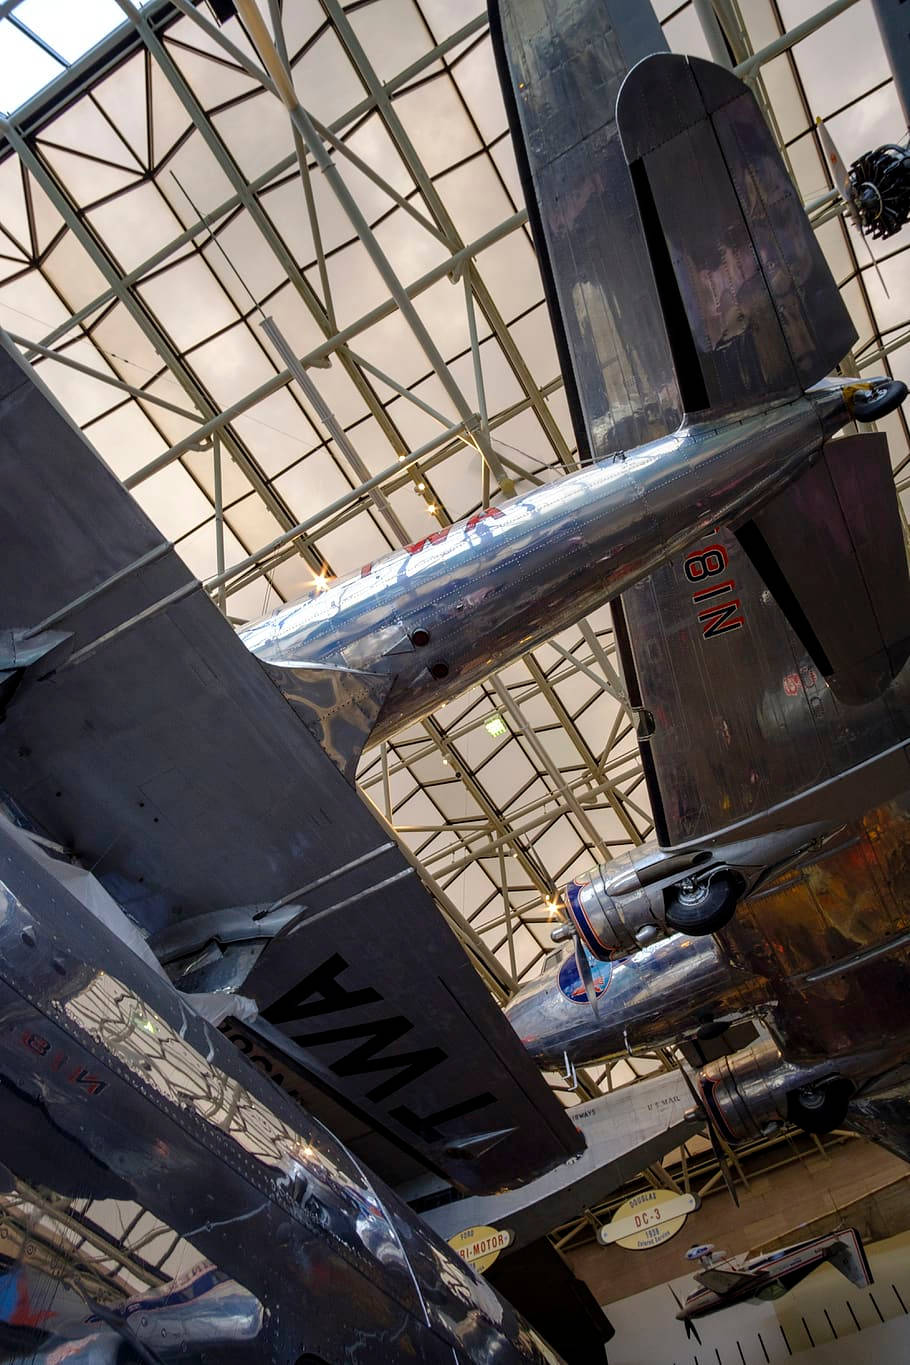 Inside the magnificent Smithsonian Hangar showcasing intriguing aircraft displays Wallpaper